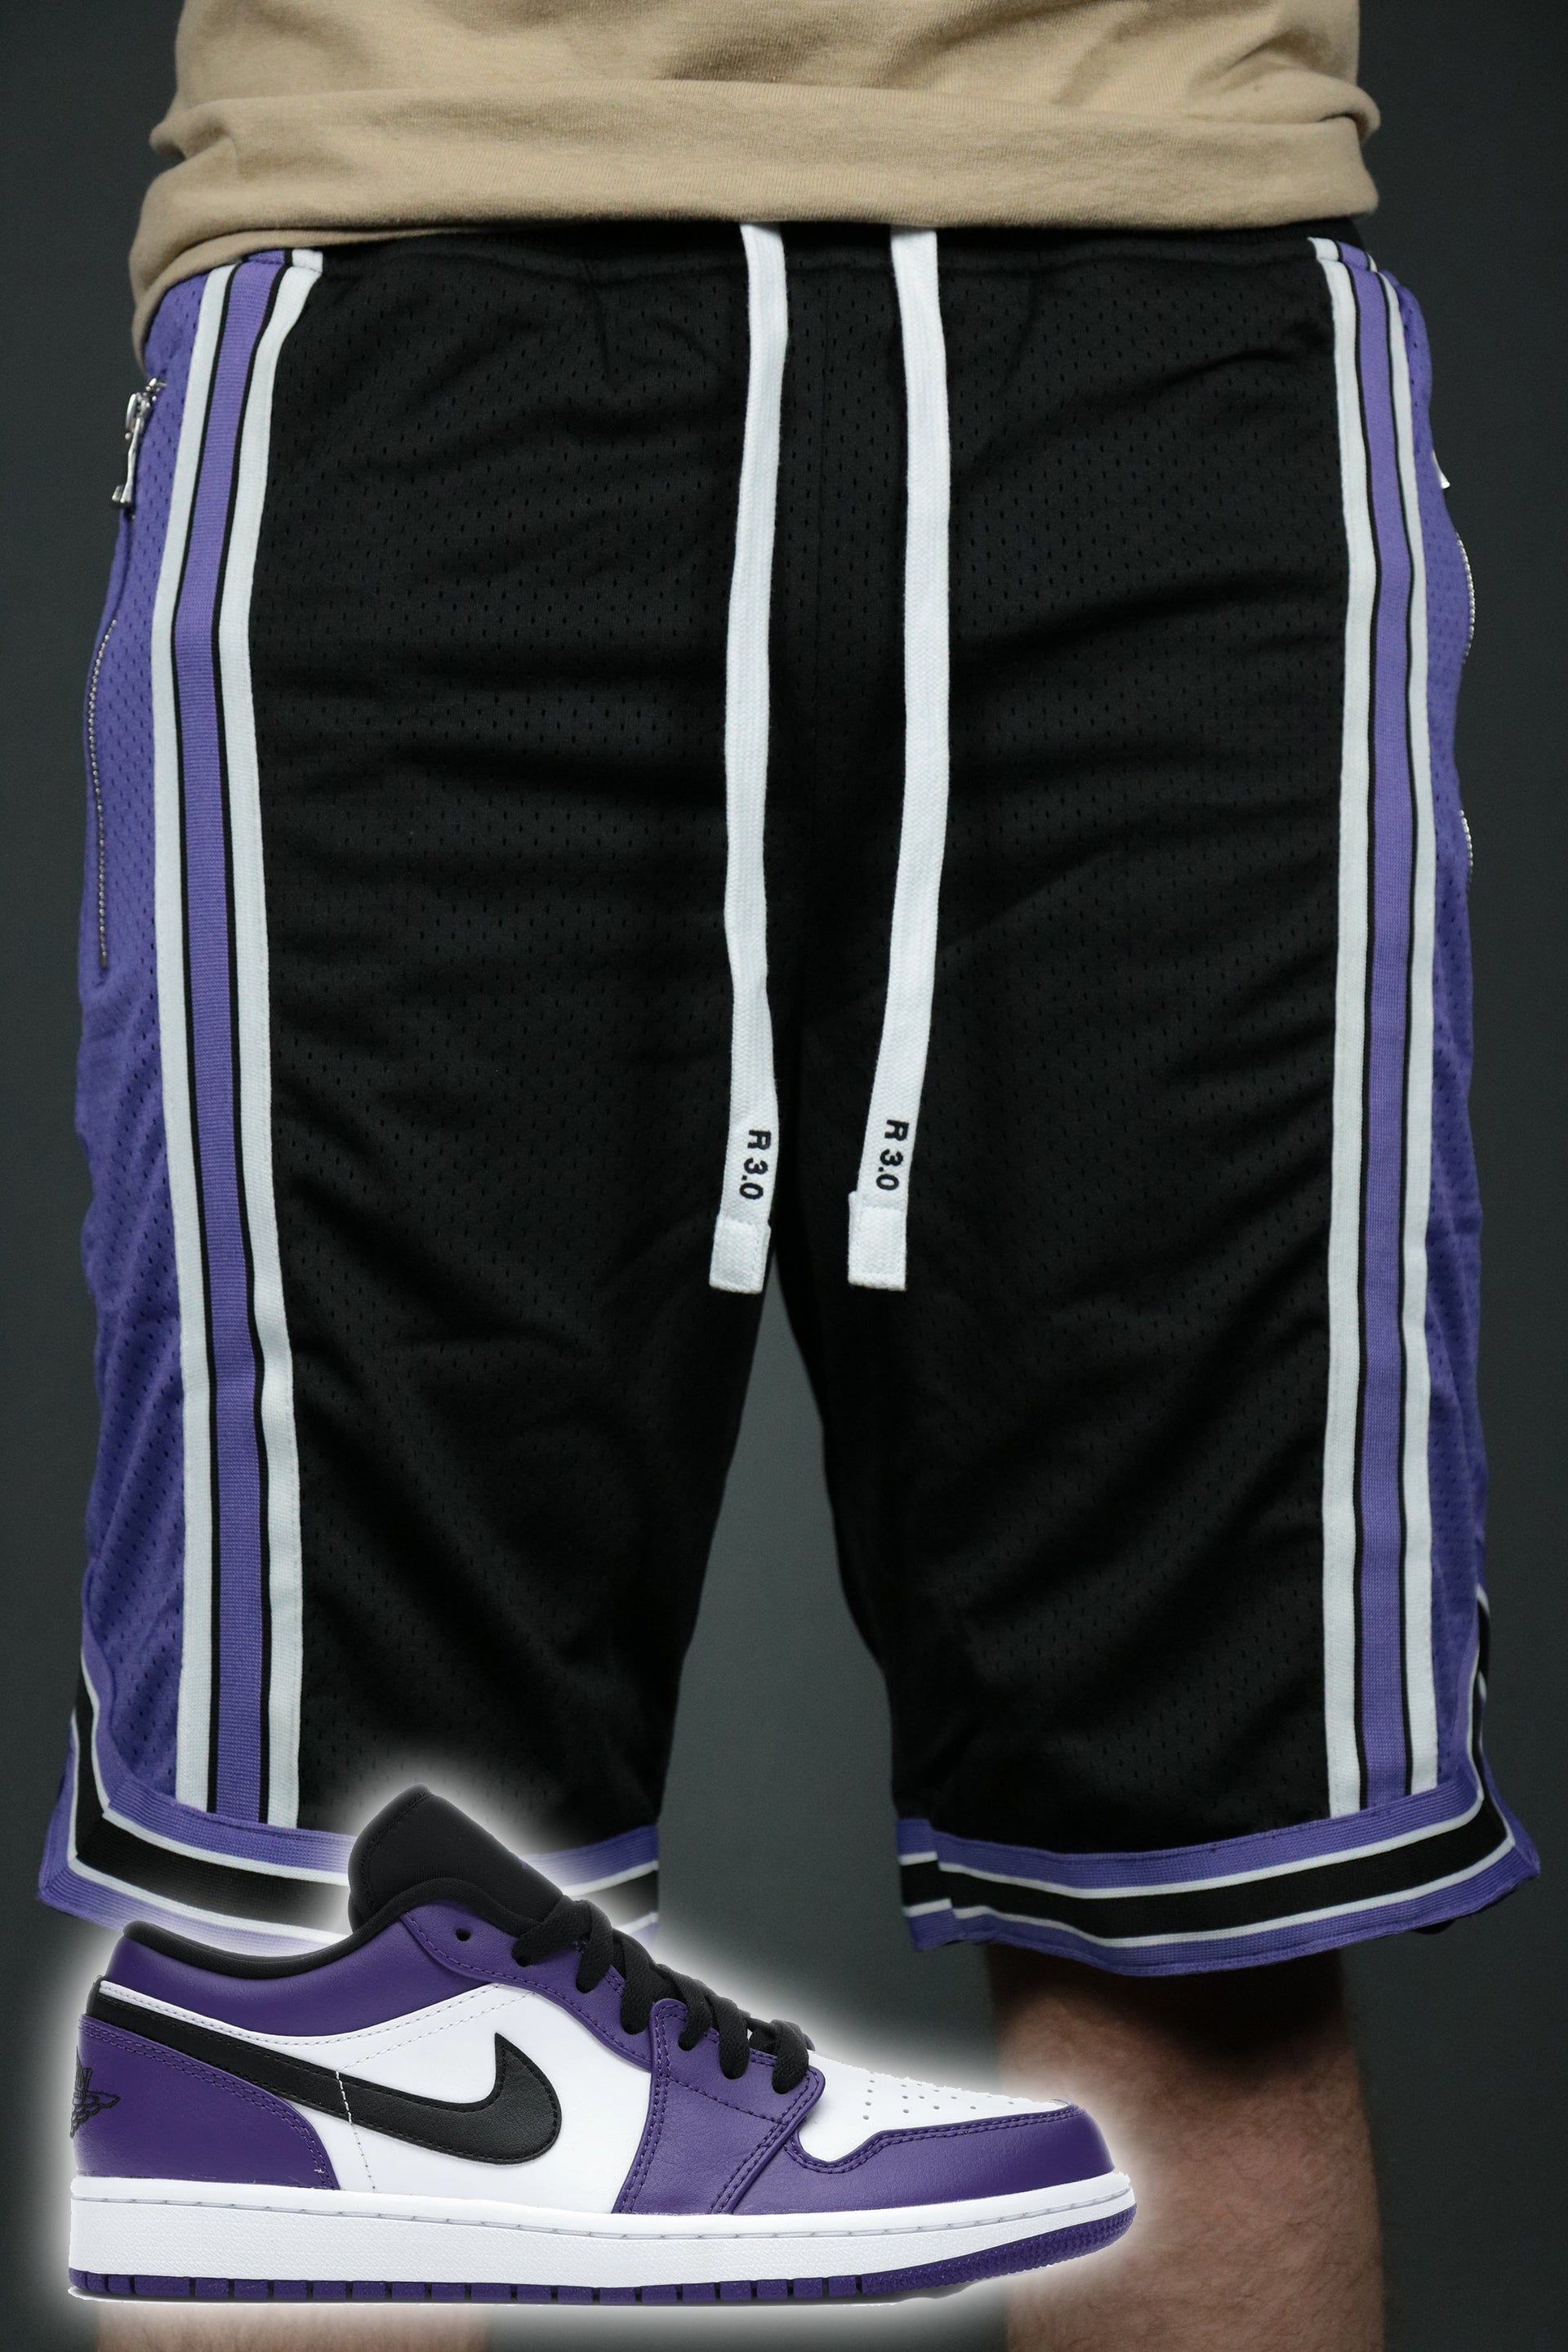 The Sacramento black purple shorts to match Air Jordan 1 Low Court Purple sneakers by Jordan Craig.